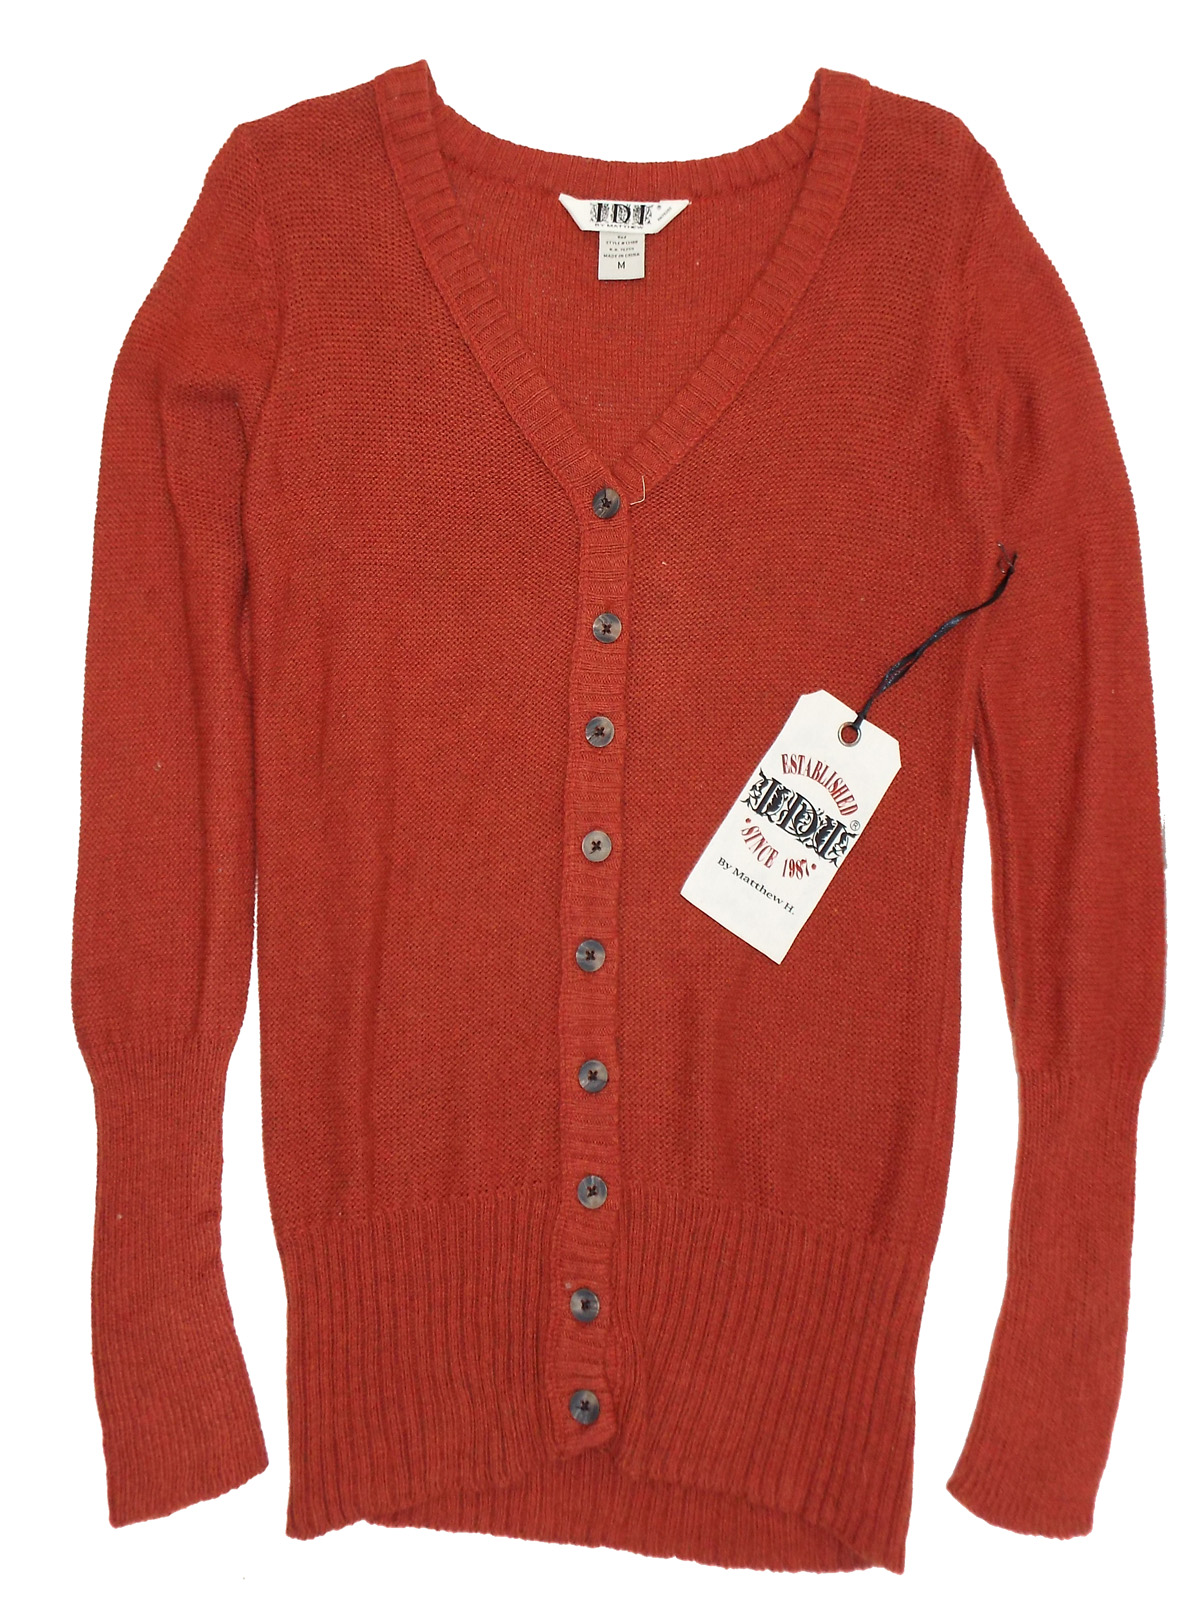 IDI by Matthew - - IDI BRICK-RED Long Sleeve Knitted Cardigan - Size 8/ ...